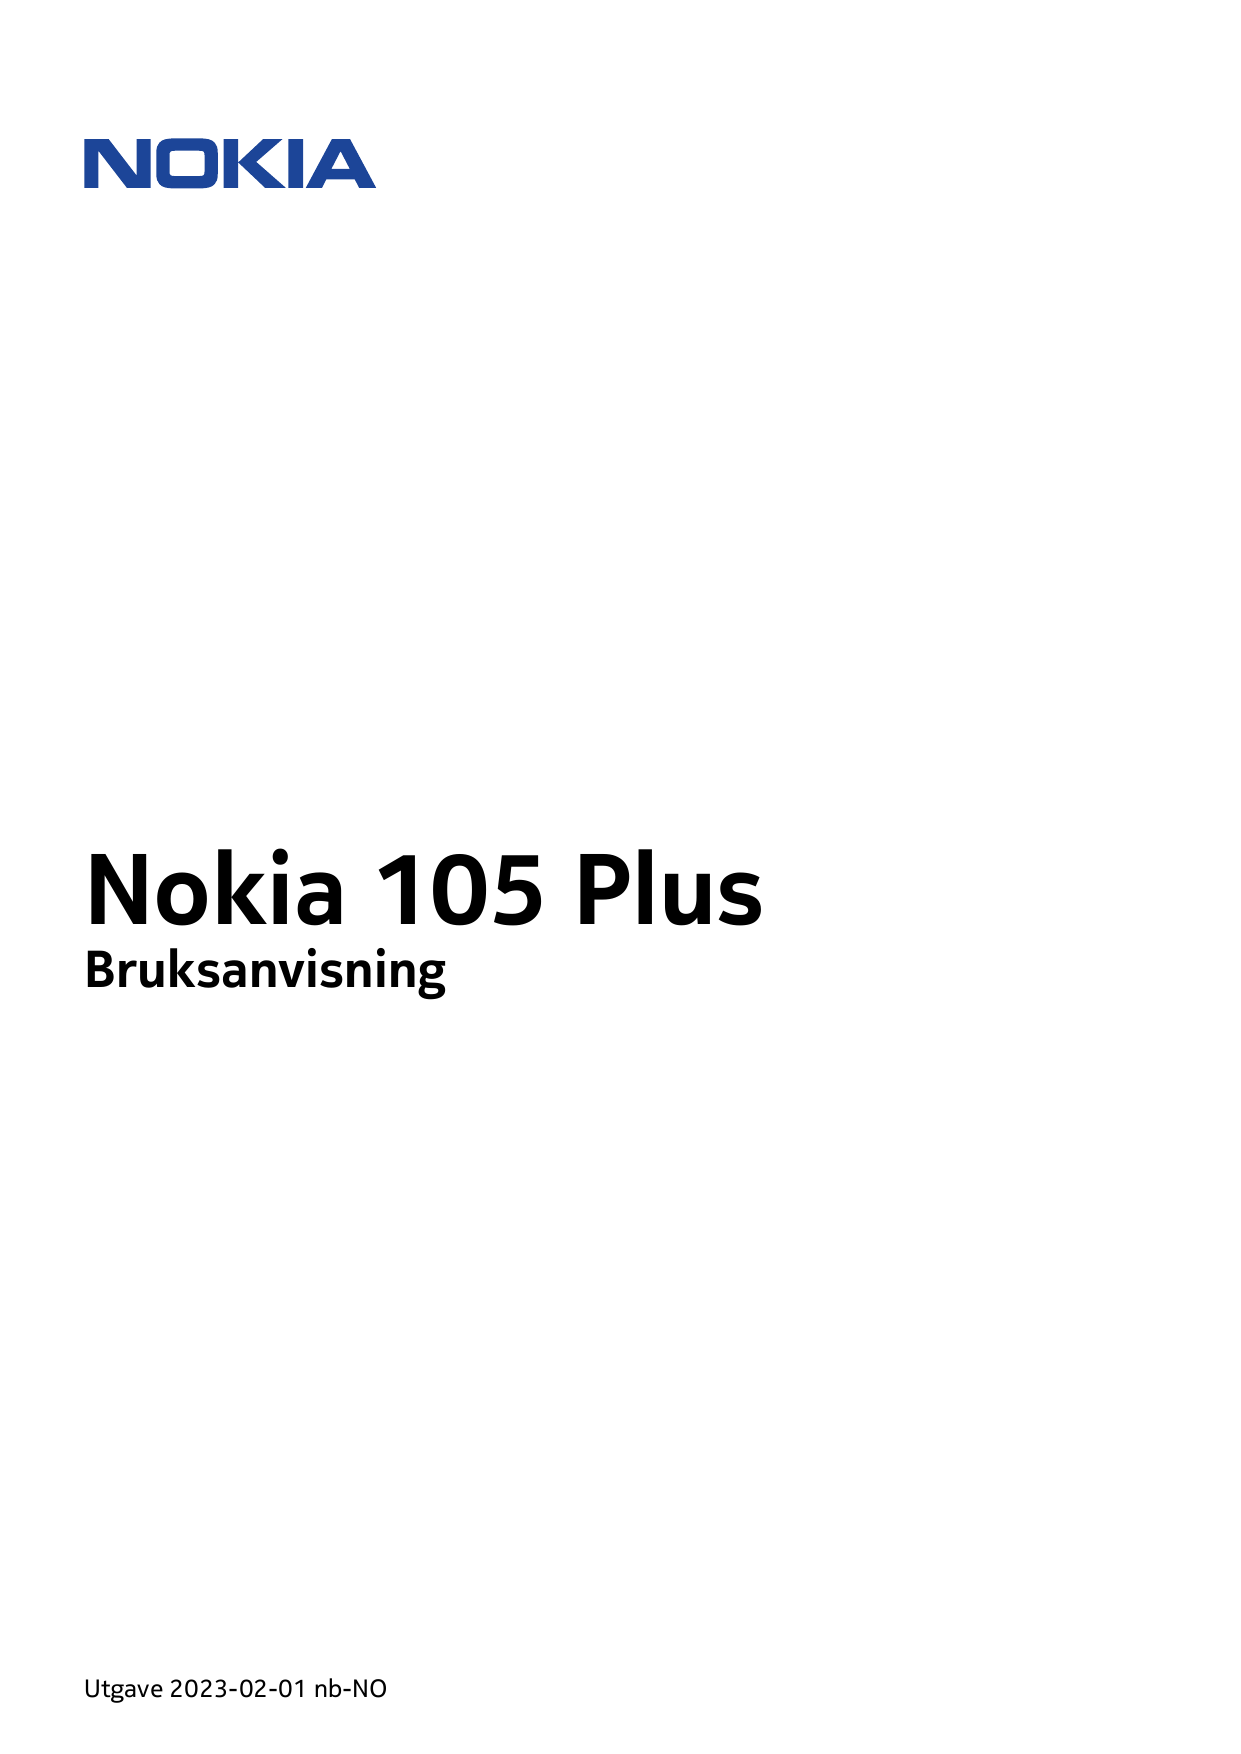 Nokia 105 PlusBruksanvisningUtgave 2023-02-01 nb-NO